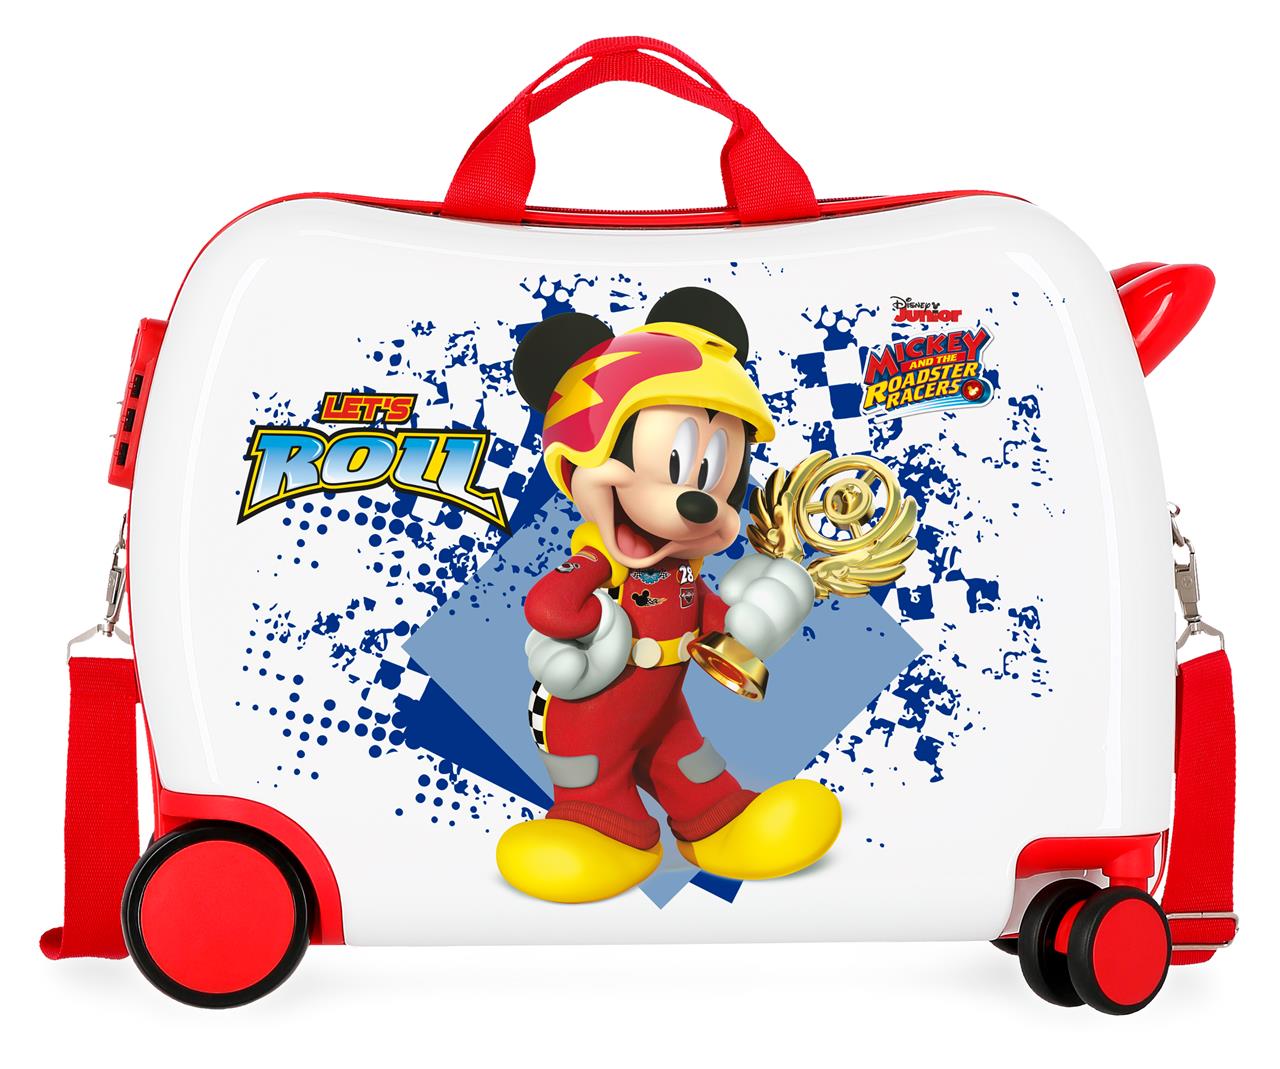 Disney & Frozen Kids Ride on Suitcase Trunki Style - mixed colours - liquidation.store